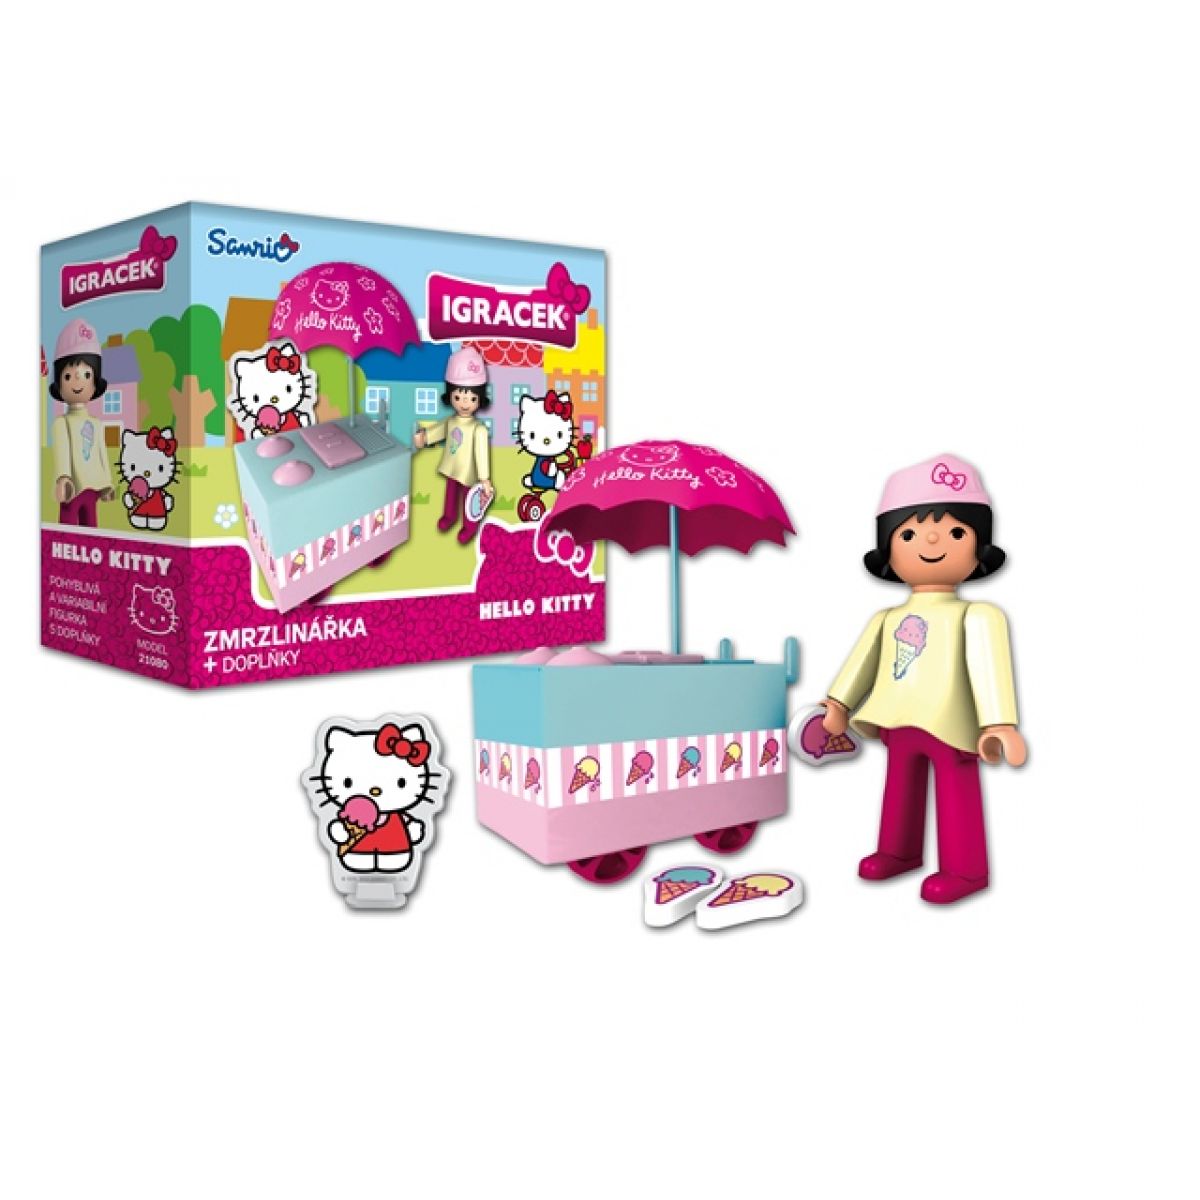 Igráček a Hello Kitty Zmrzlinářka s doplňky